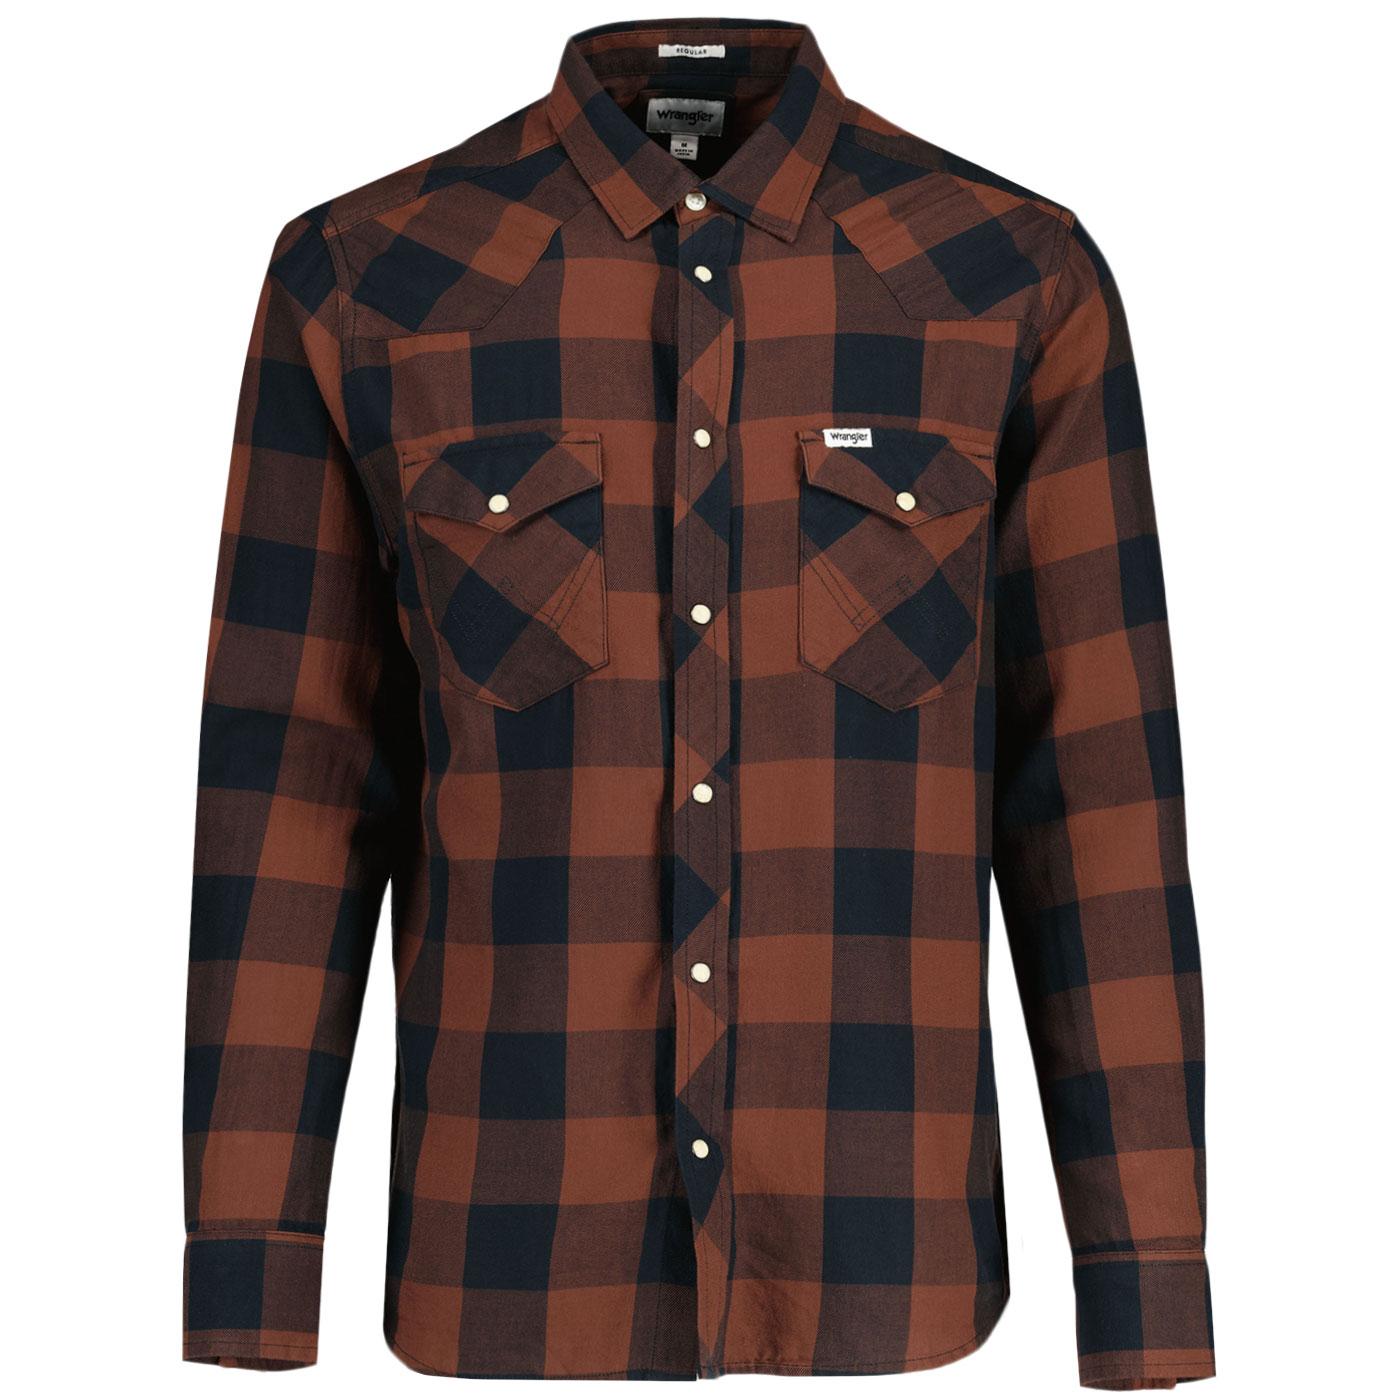 WRANGLER Retro Lumberjack Check Western Shirt PS